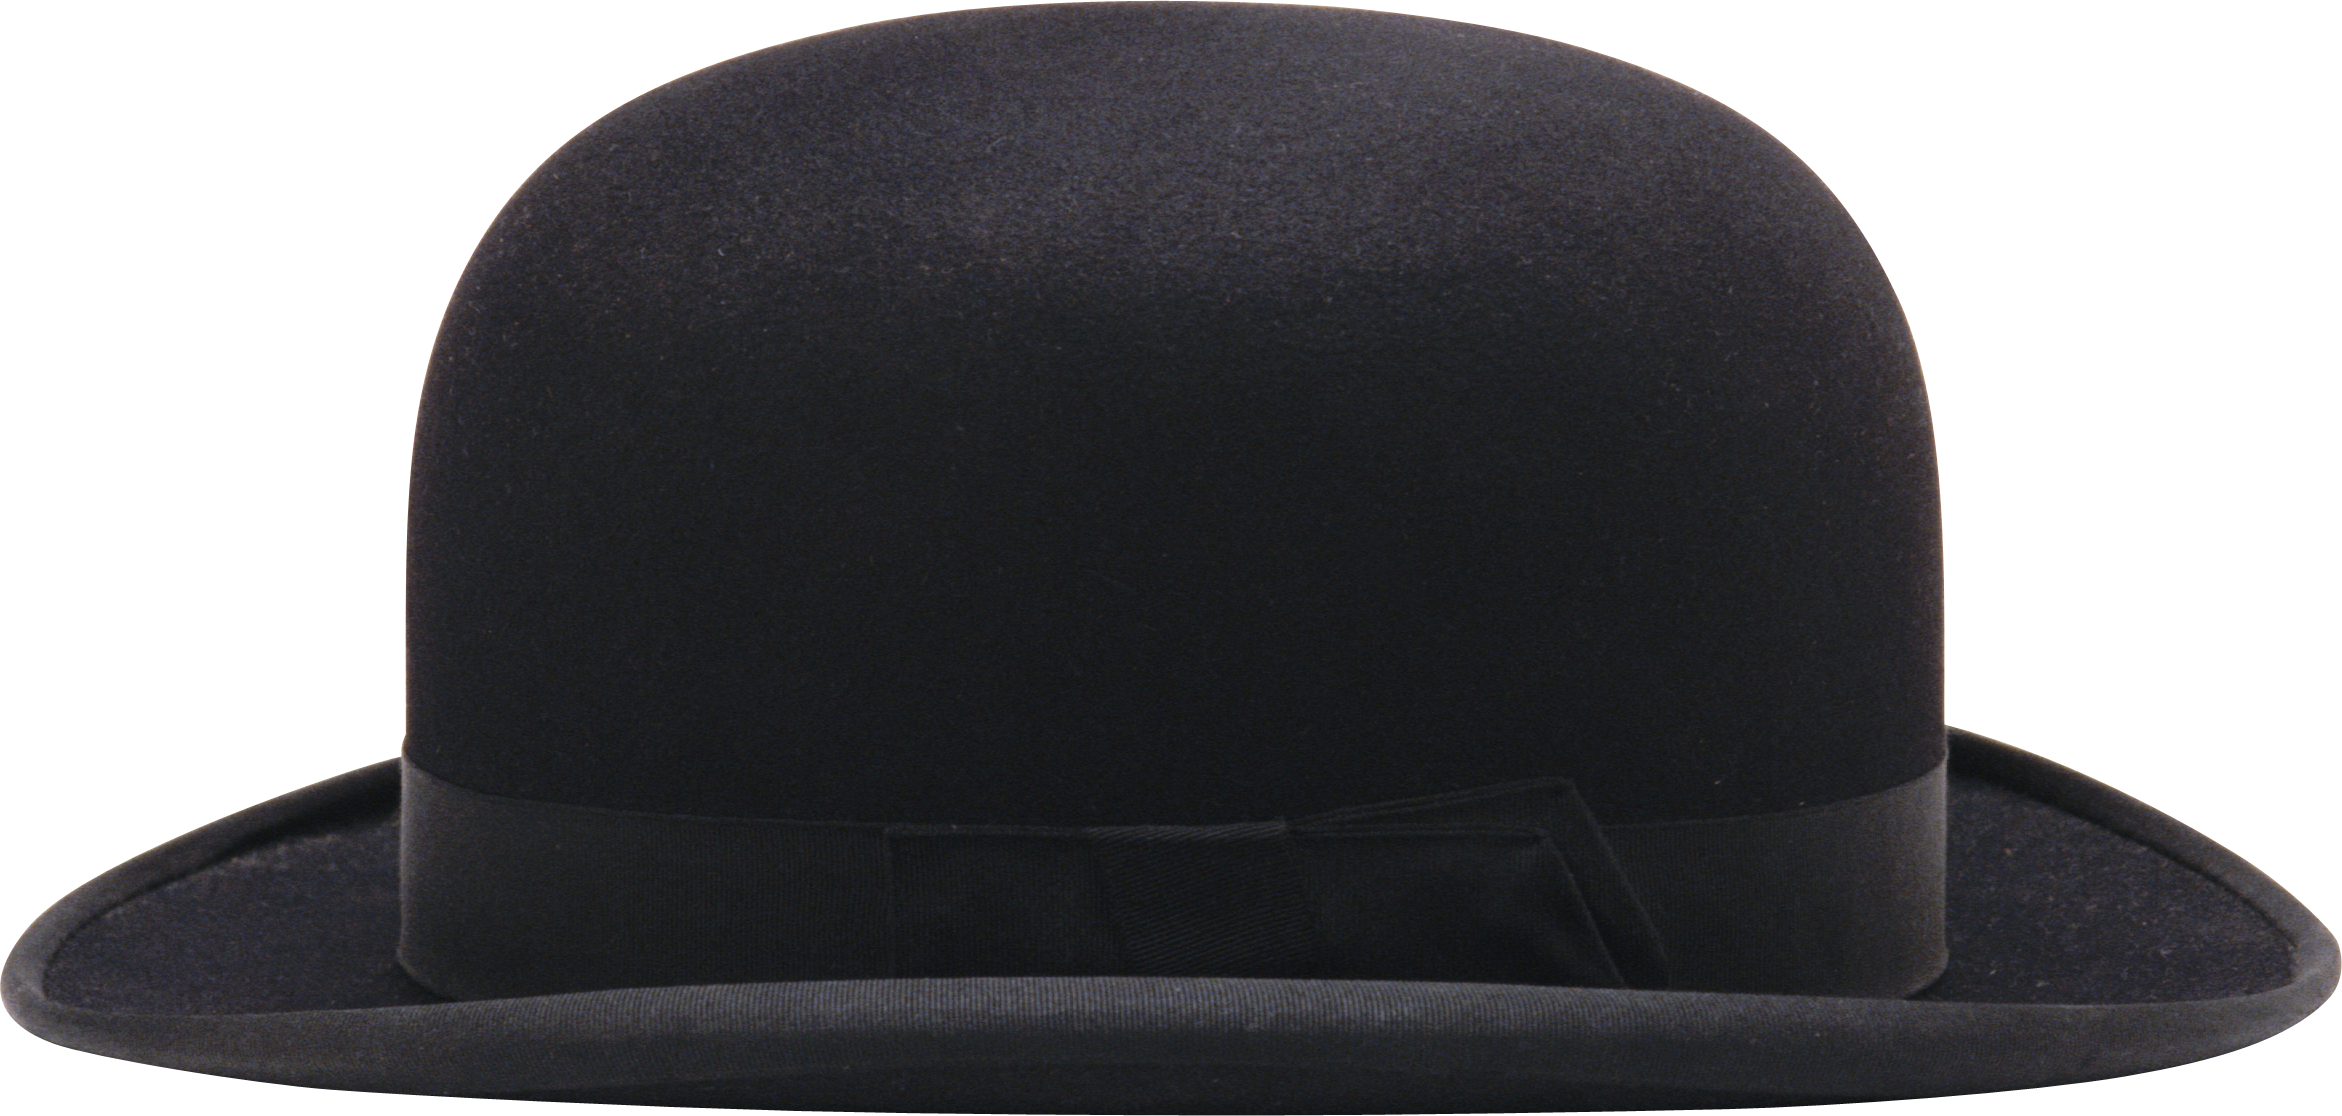 Black Bowler Hat Download PNG Image